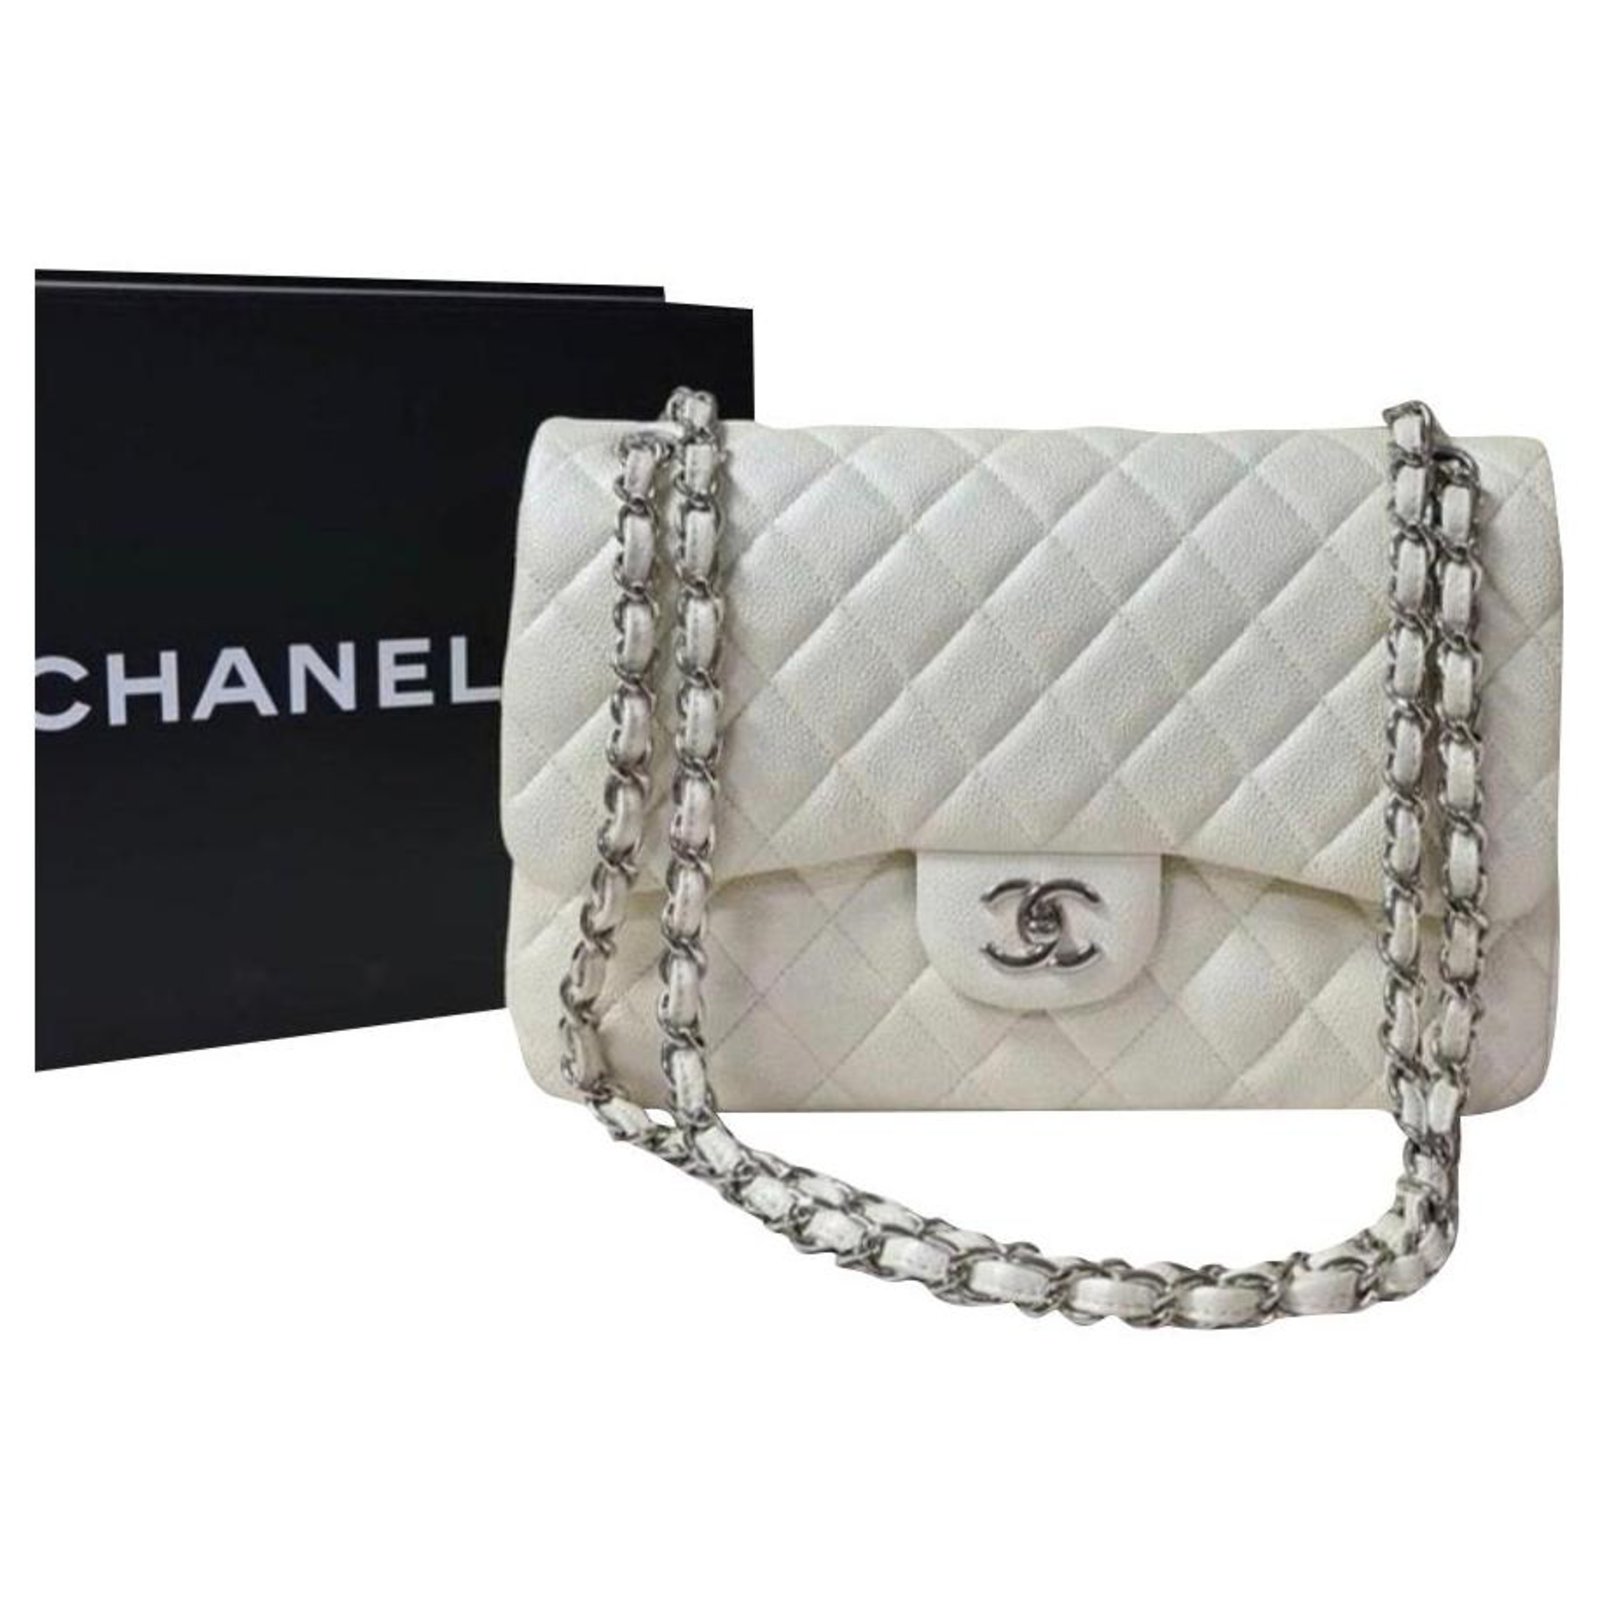 Chanel Jumbo lined flap bag Caviar Ivory SHW